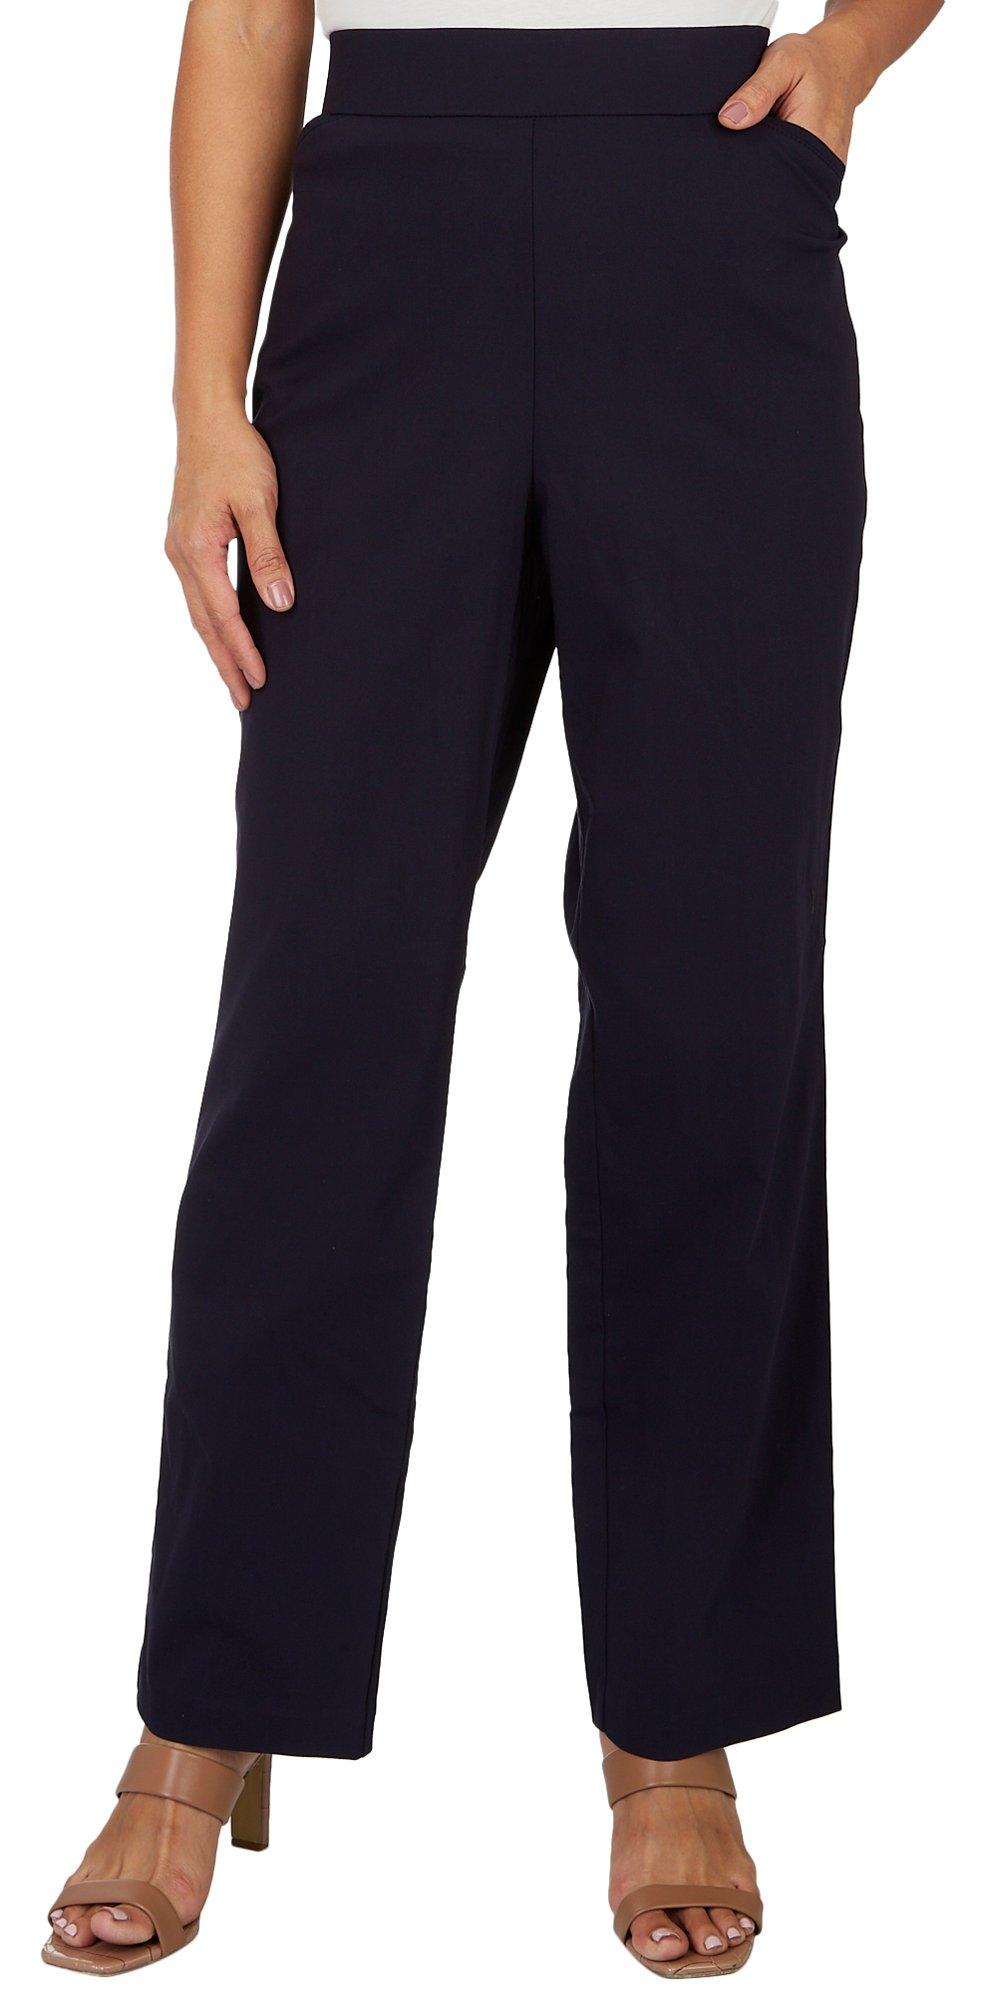 Coral Bay Womens Favorite Fit Slimming Solid Pocket Pants